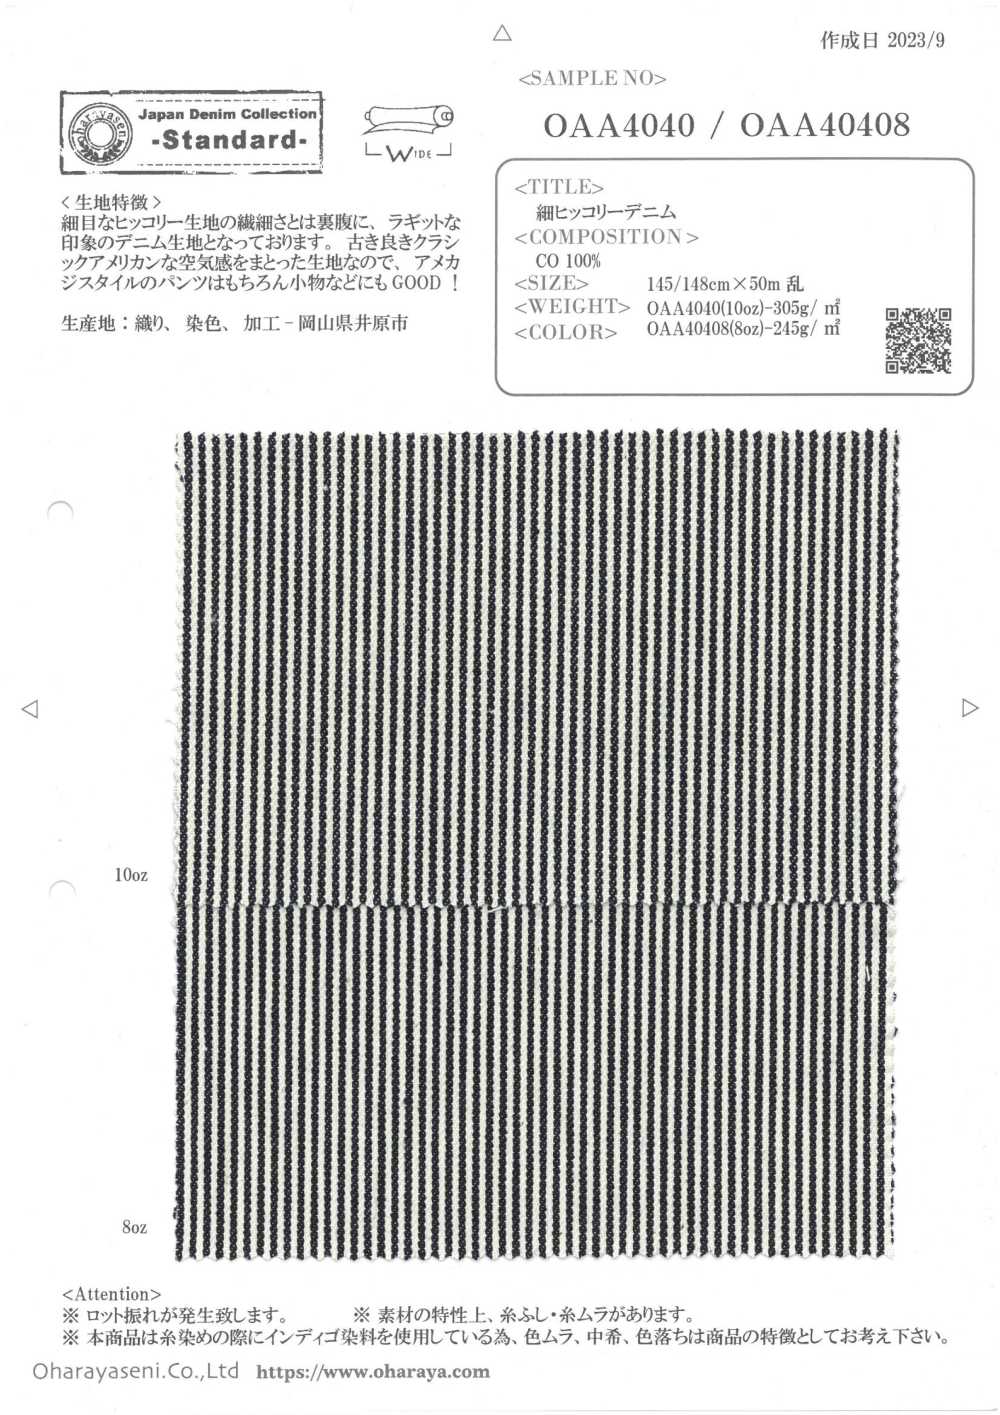 OAA40408 Fine Hickory Denim (8oz)[Textile / Fabric] Oharayaseni